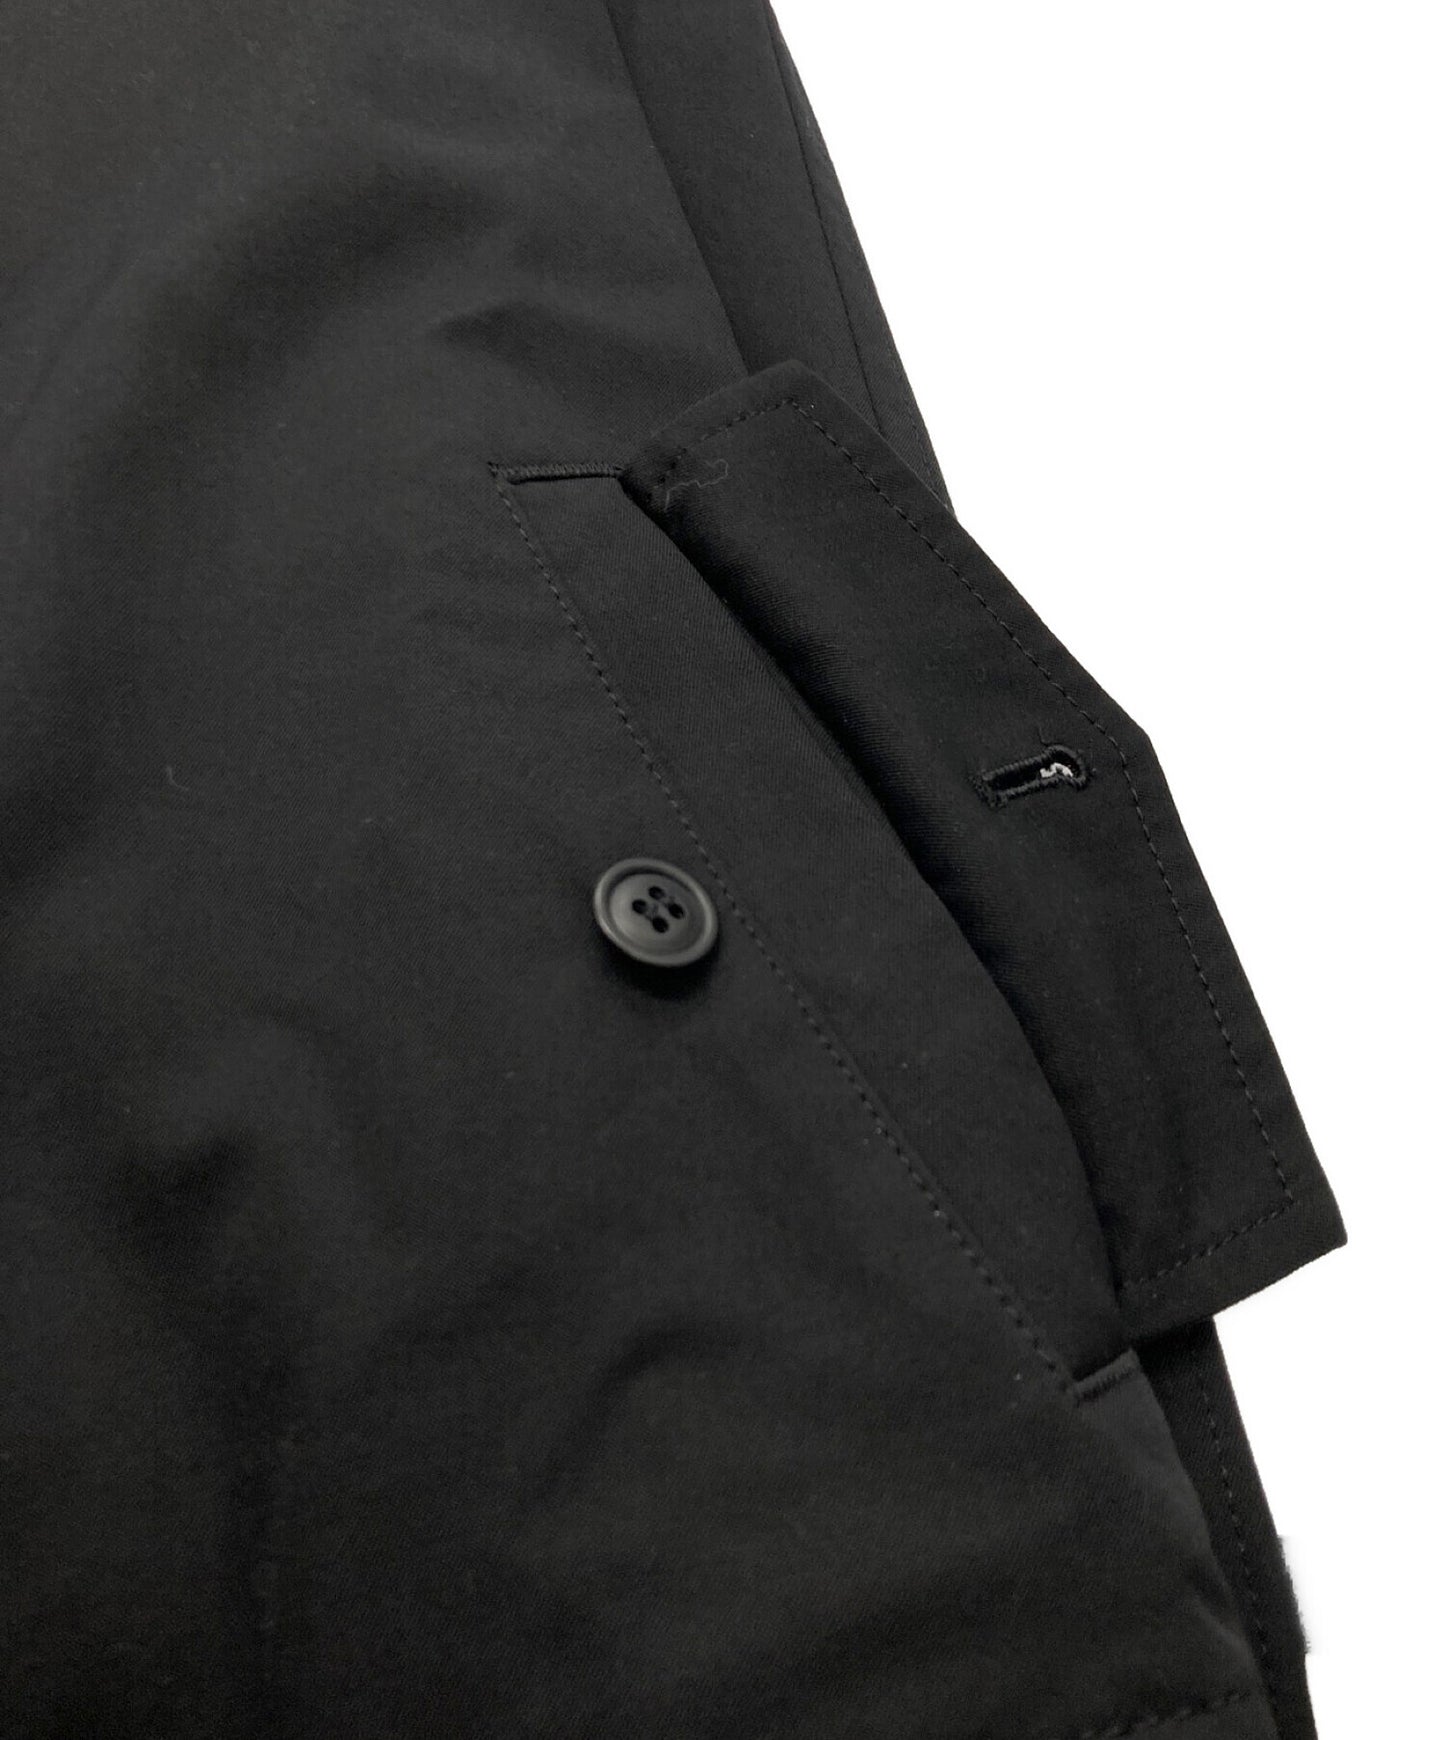 [Pre-owned] COMME des GARCONS Homme Plus Wool gaber zip-up jacket PE-J081